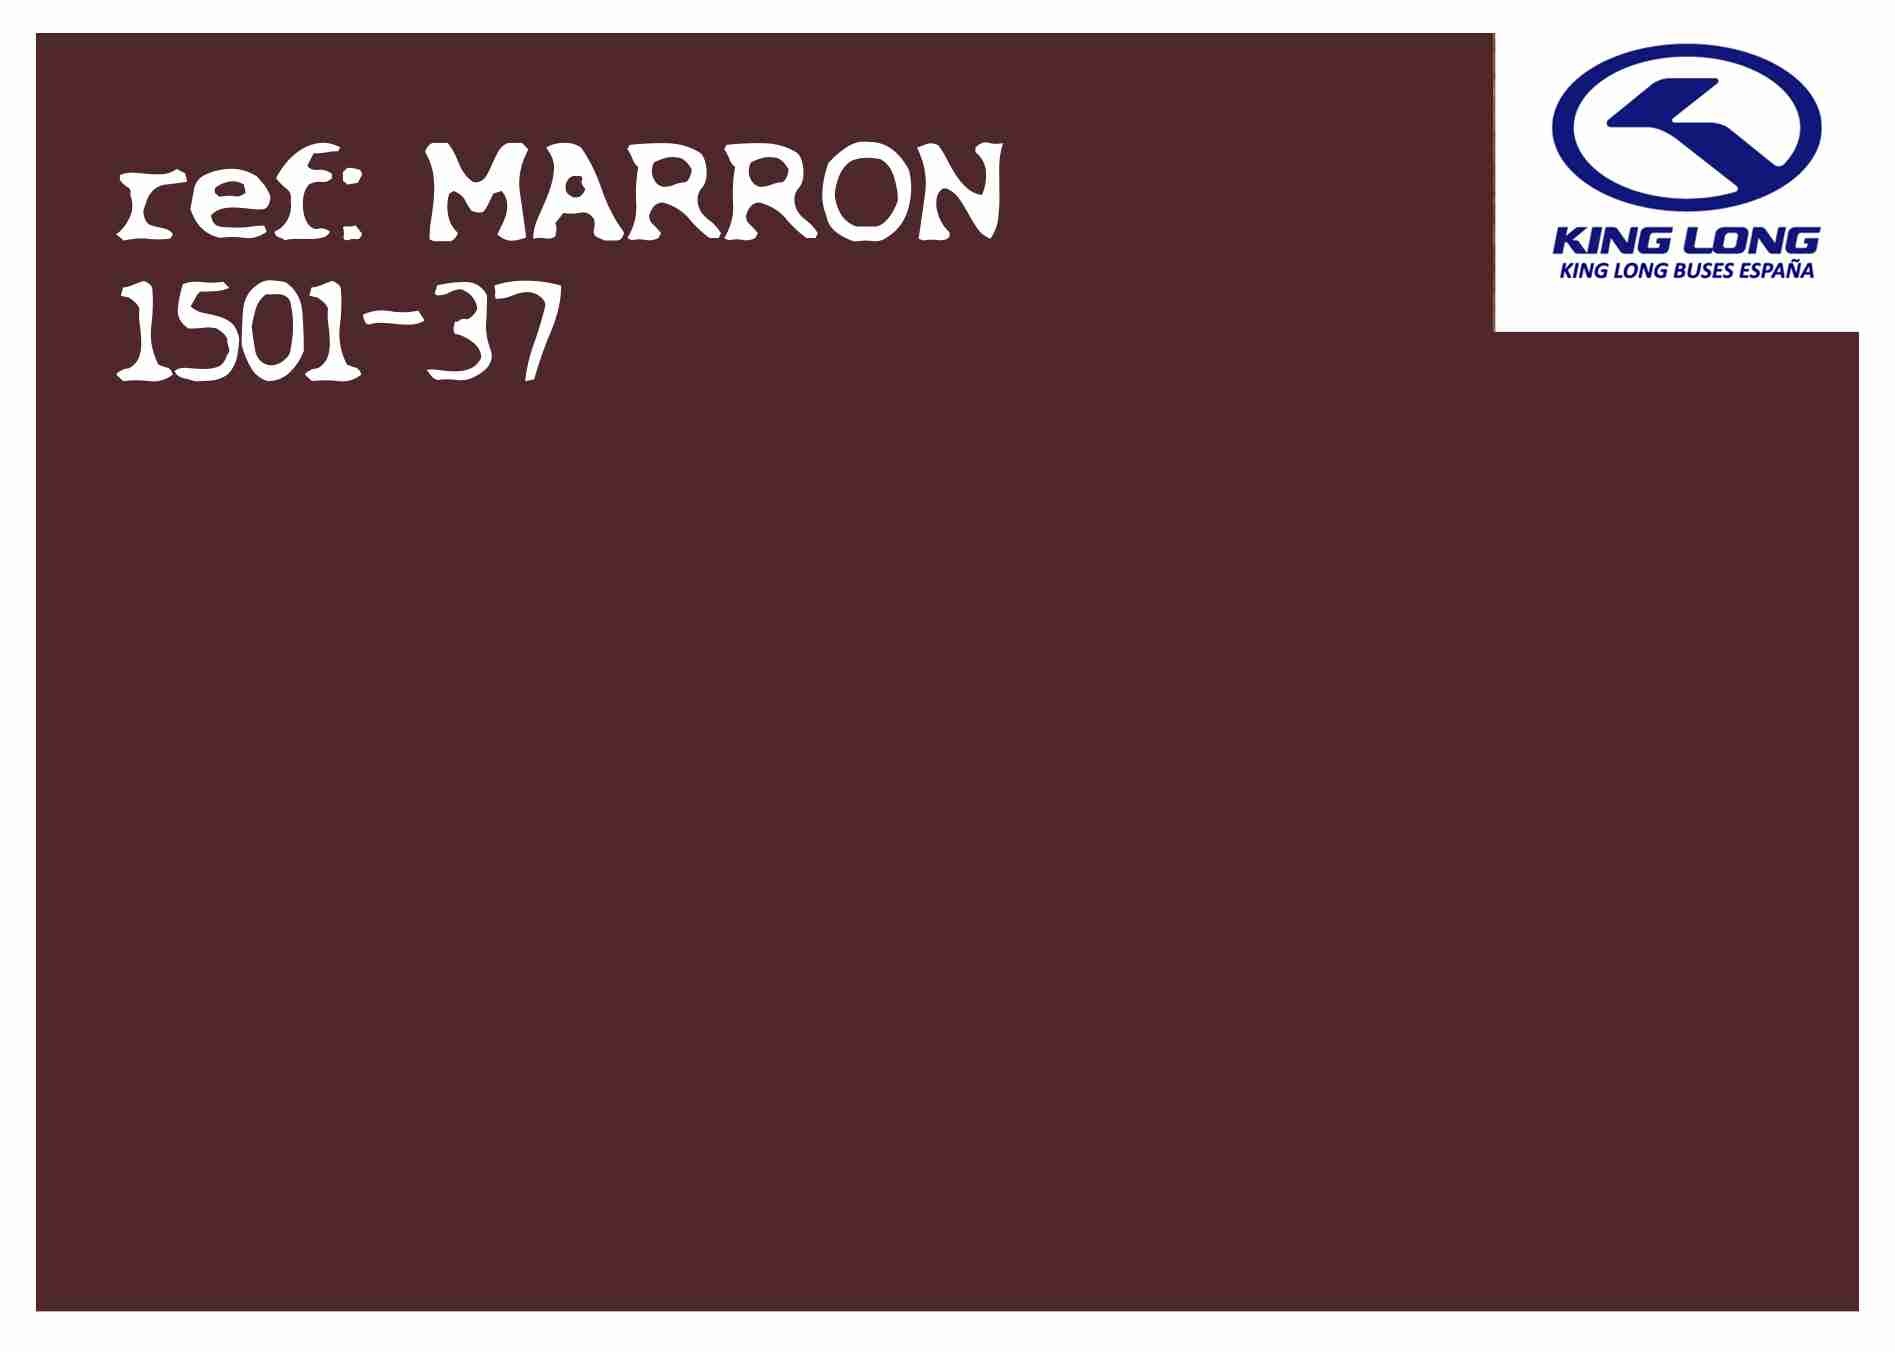 MARRON1501-37